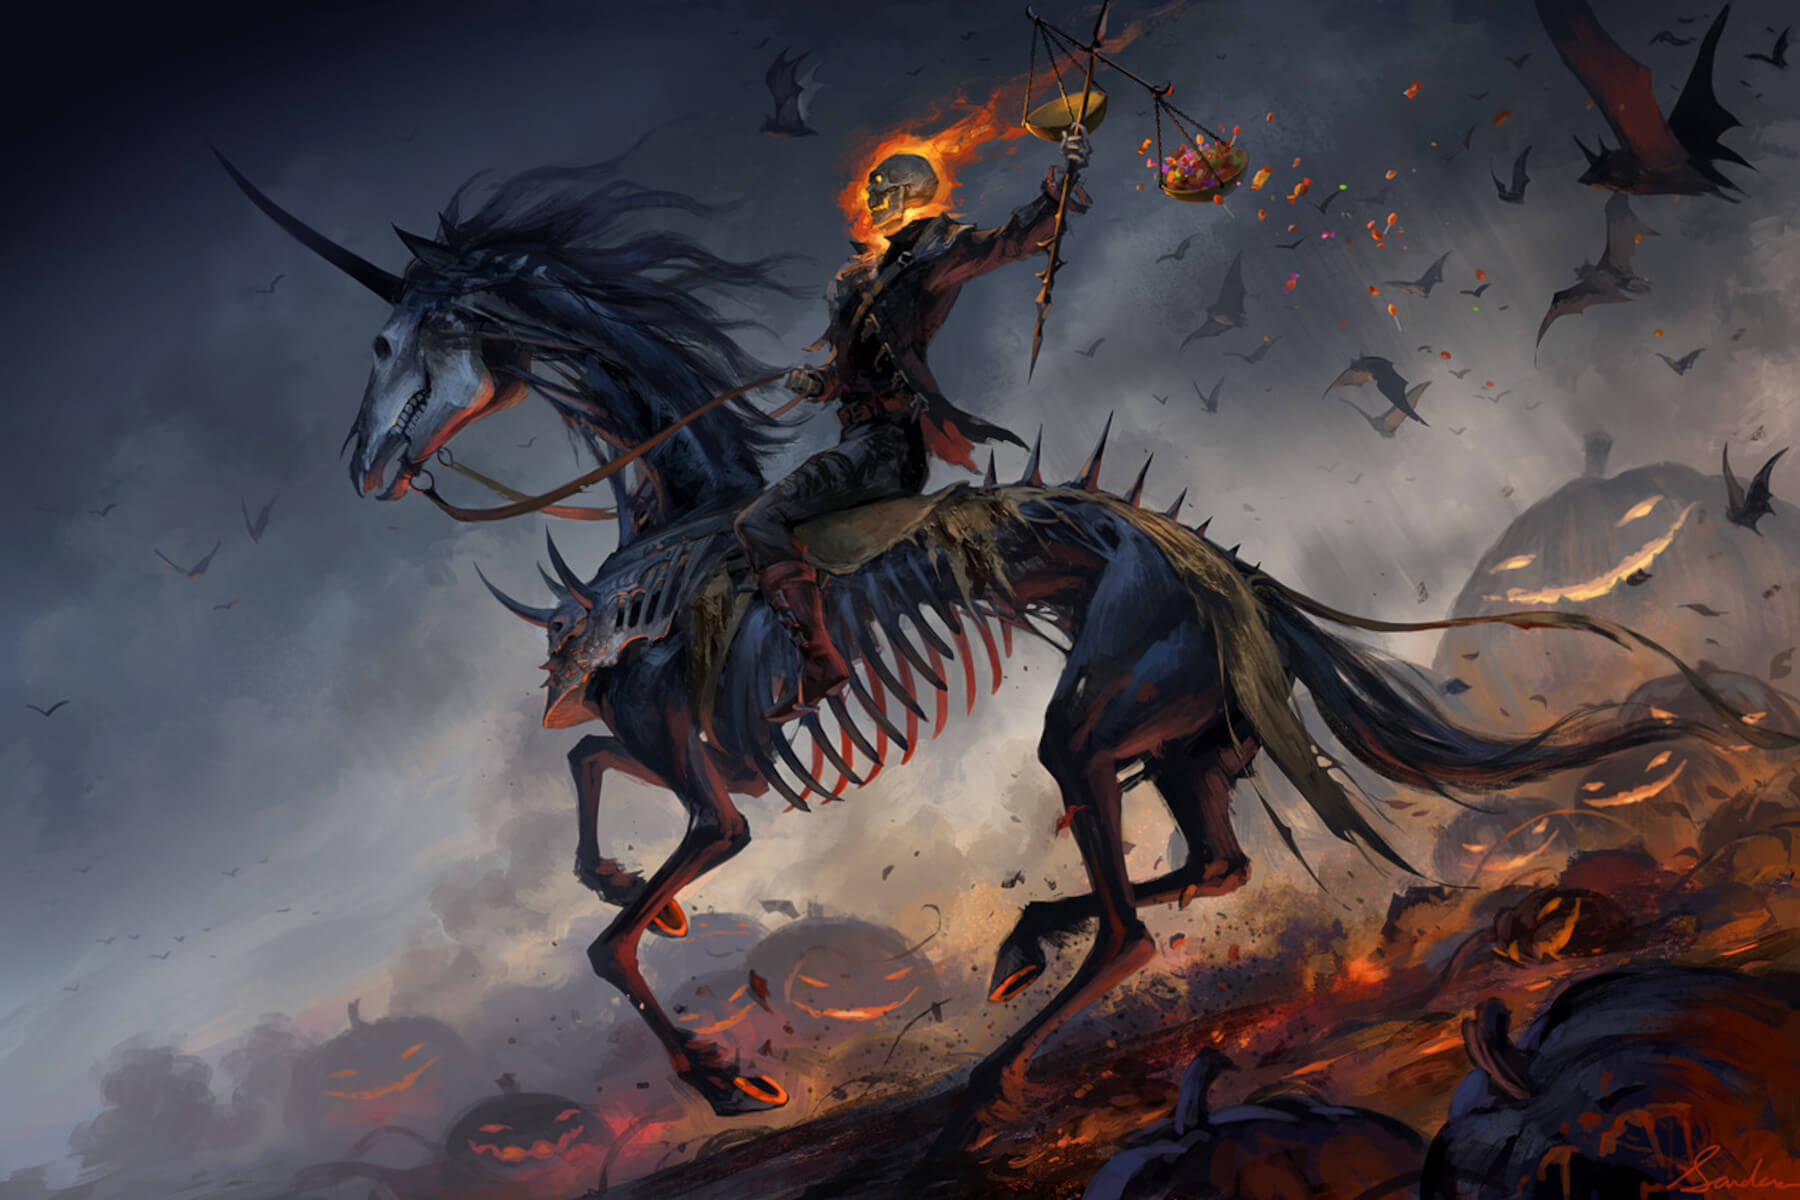 A skeleton with a flaming skull rides a skeletal horse past demonic jack-o-lanterns, by Sandara Tang.